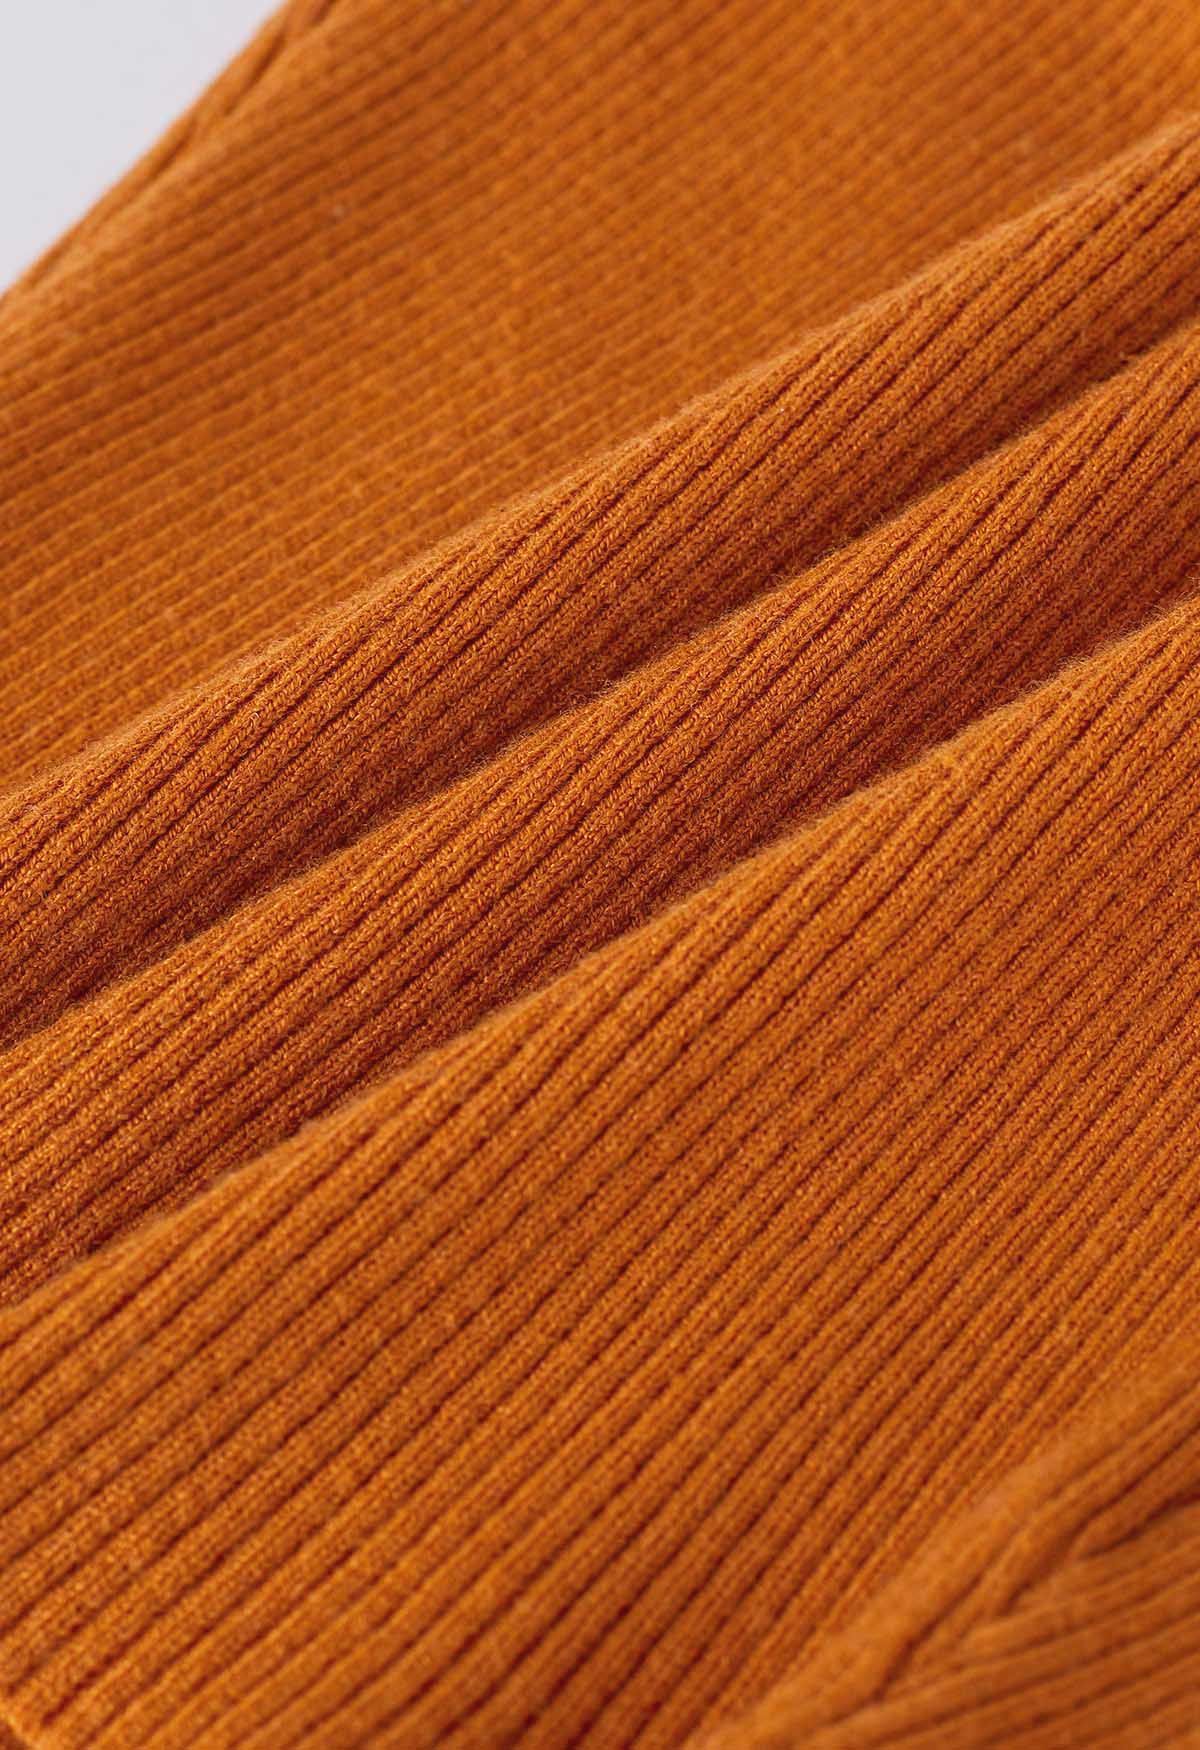 Criss Cross Straps Halter Knit Top in Orange